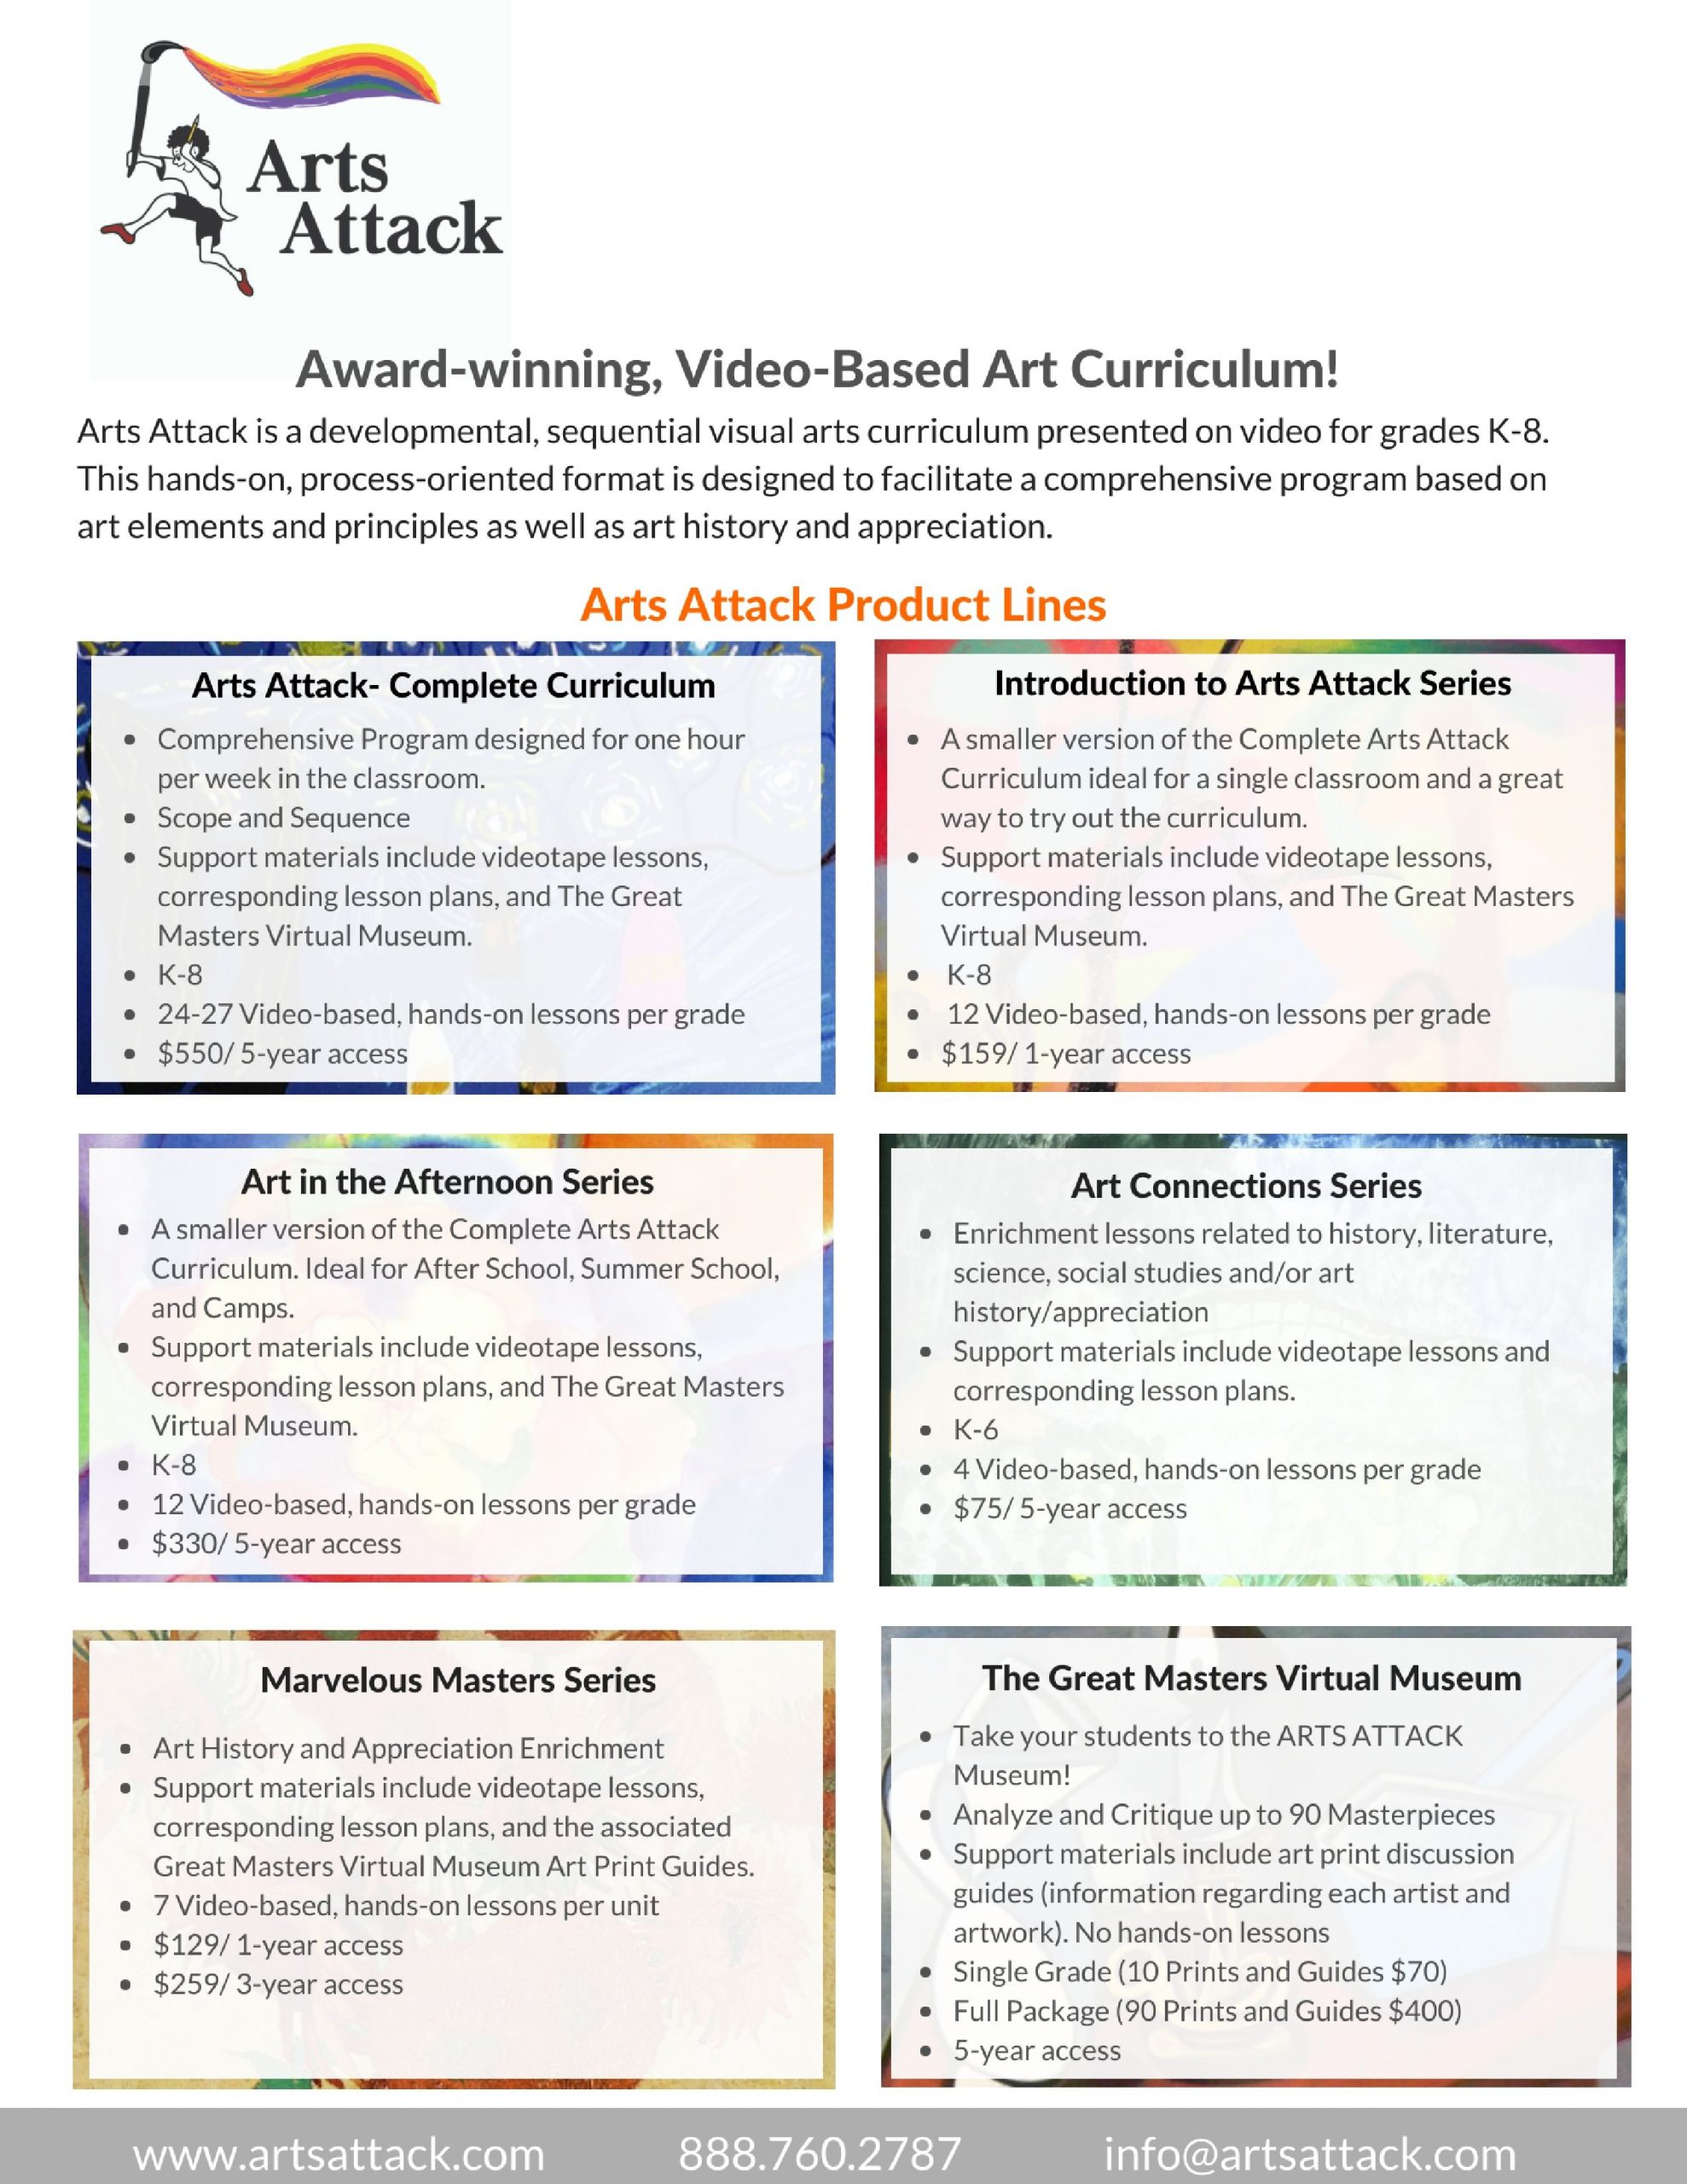 Arts Attack Product Line Descriptions | Curriculum Lesson